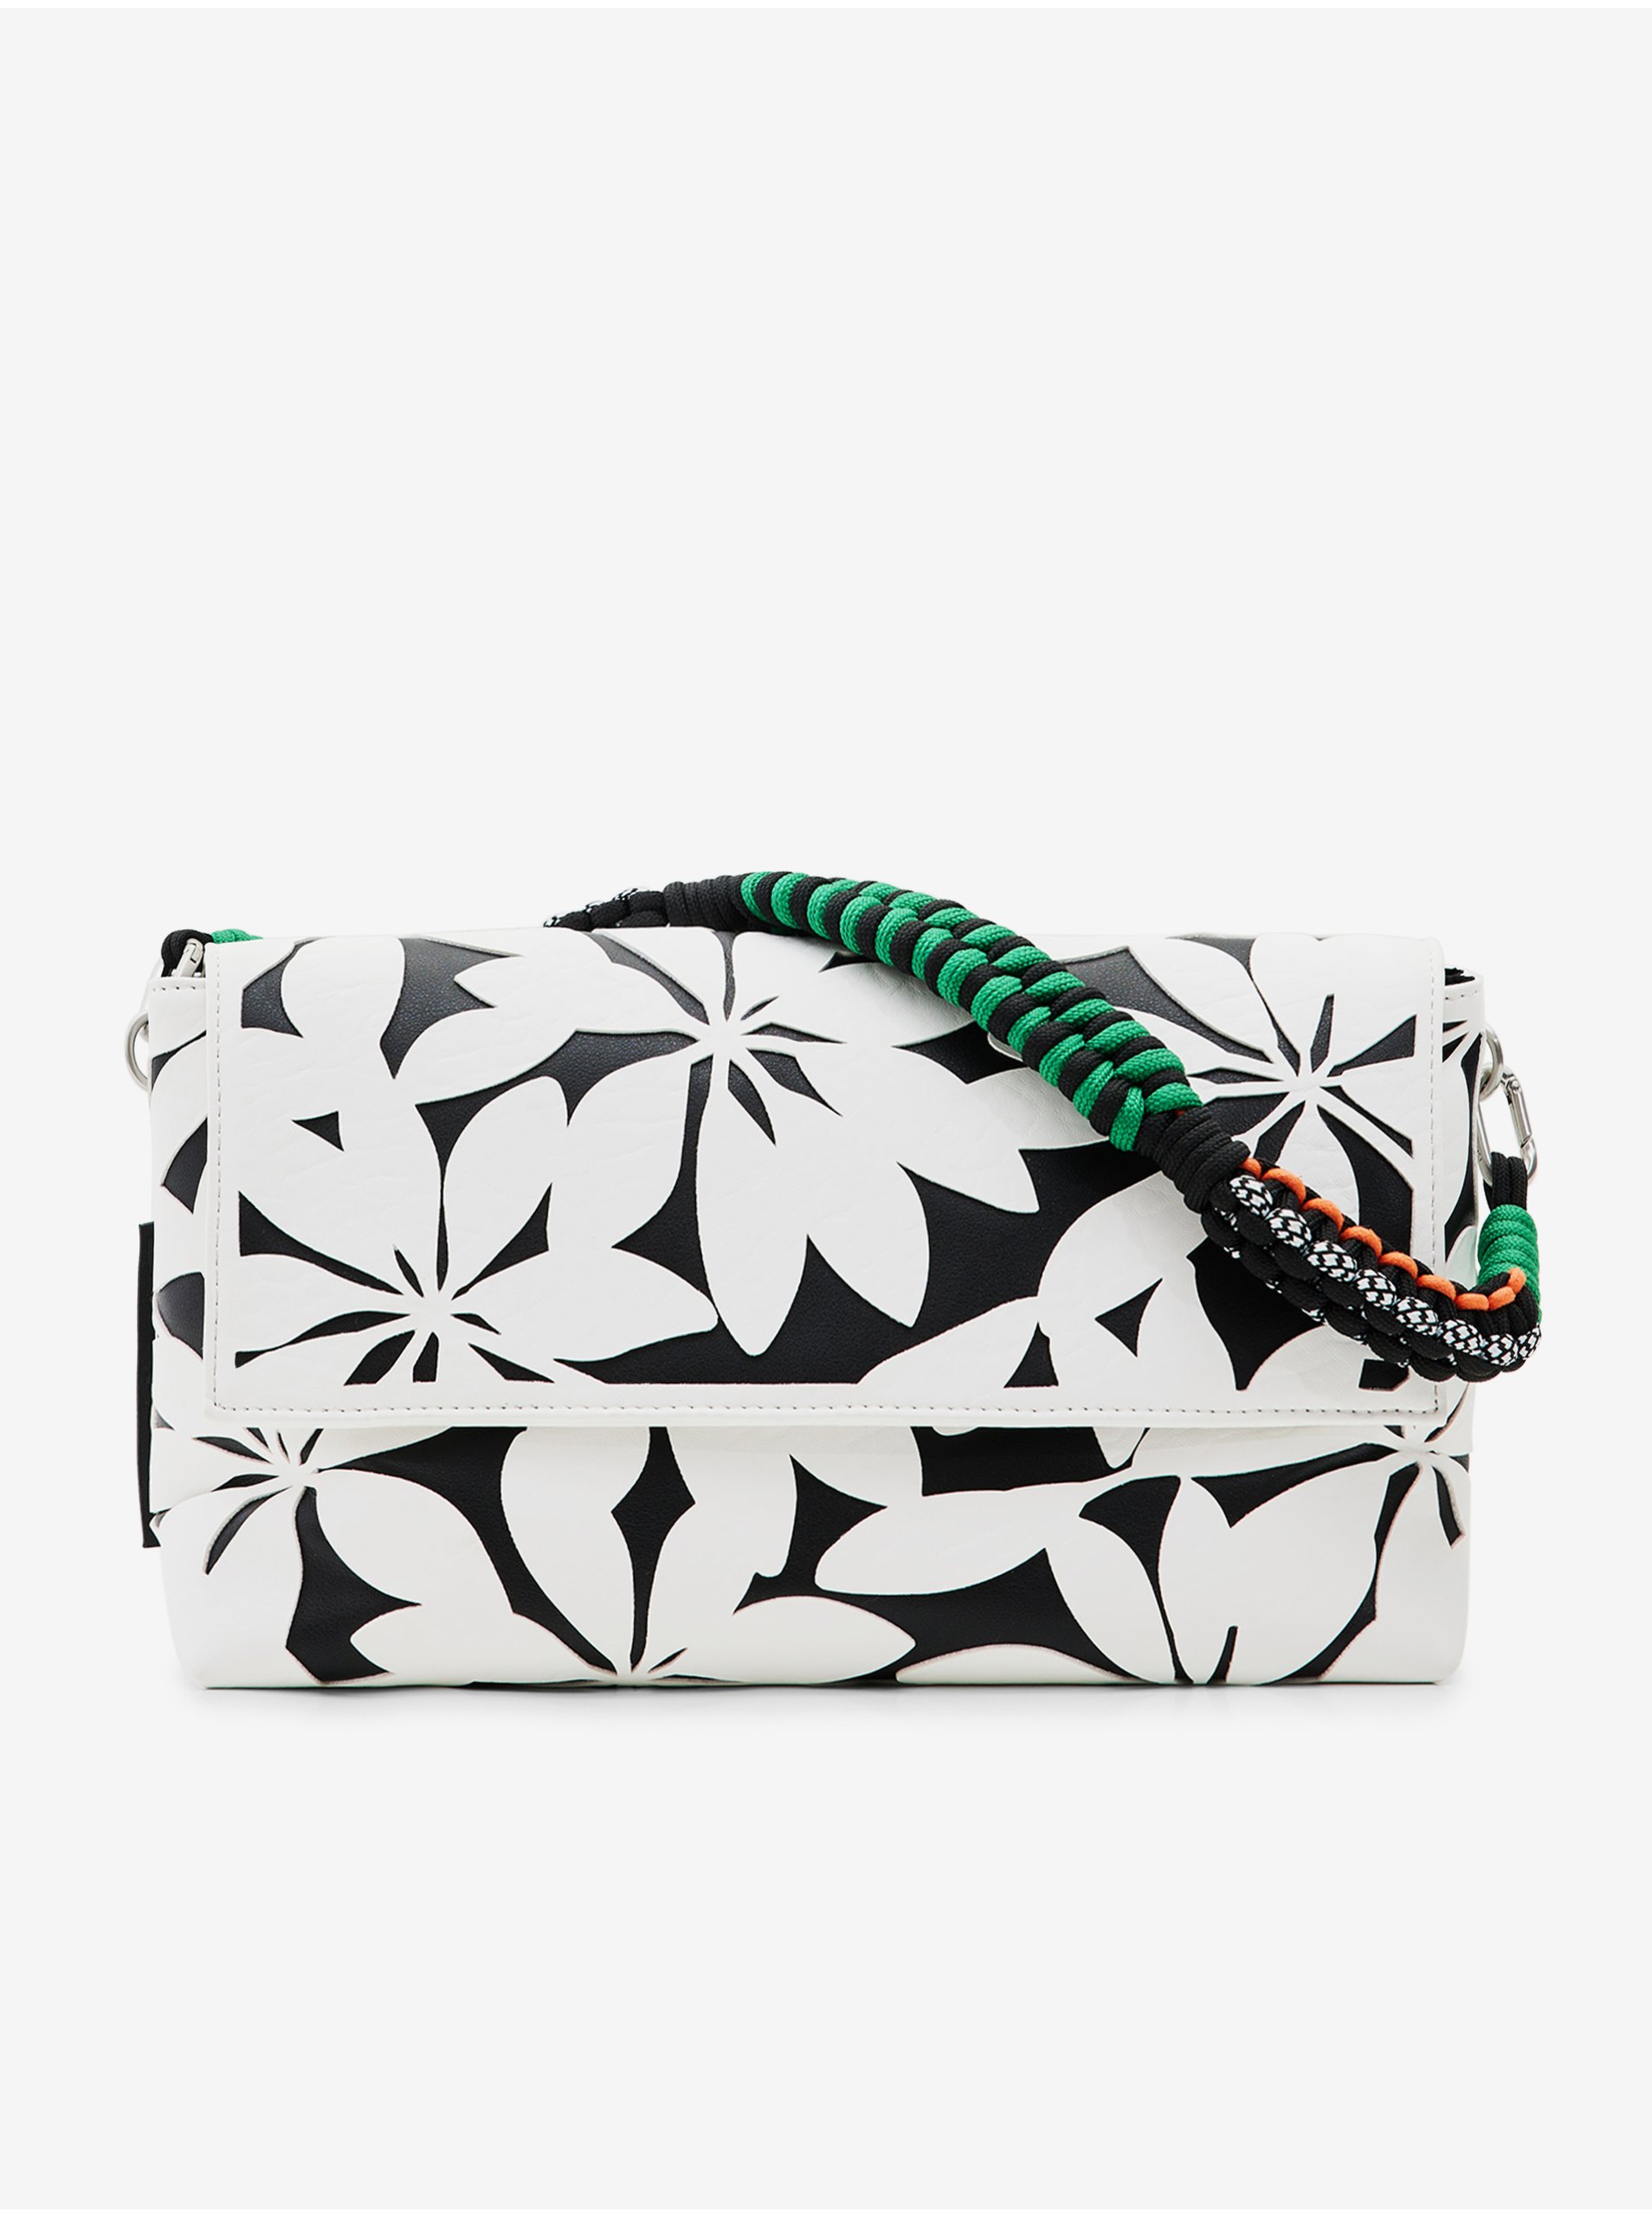 Black and white women's floral handbag Desigual Onyx Venecia 2.0 - Women